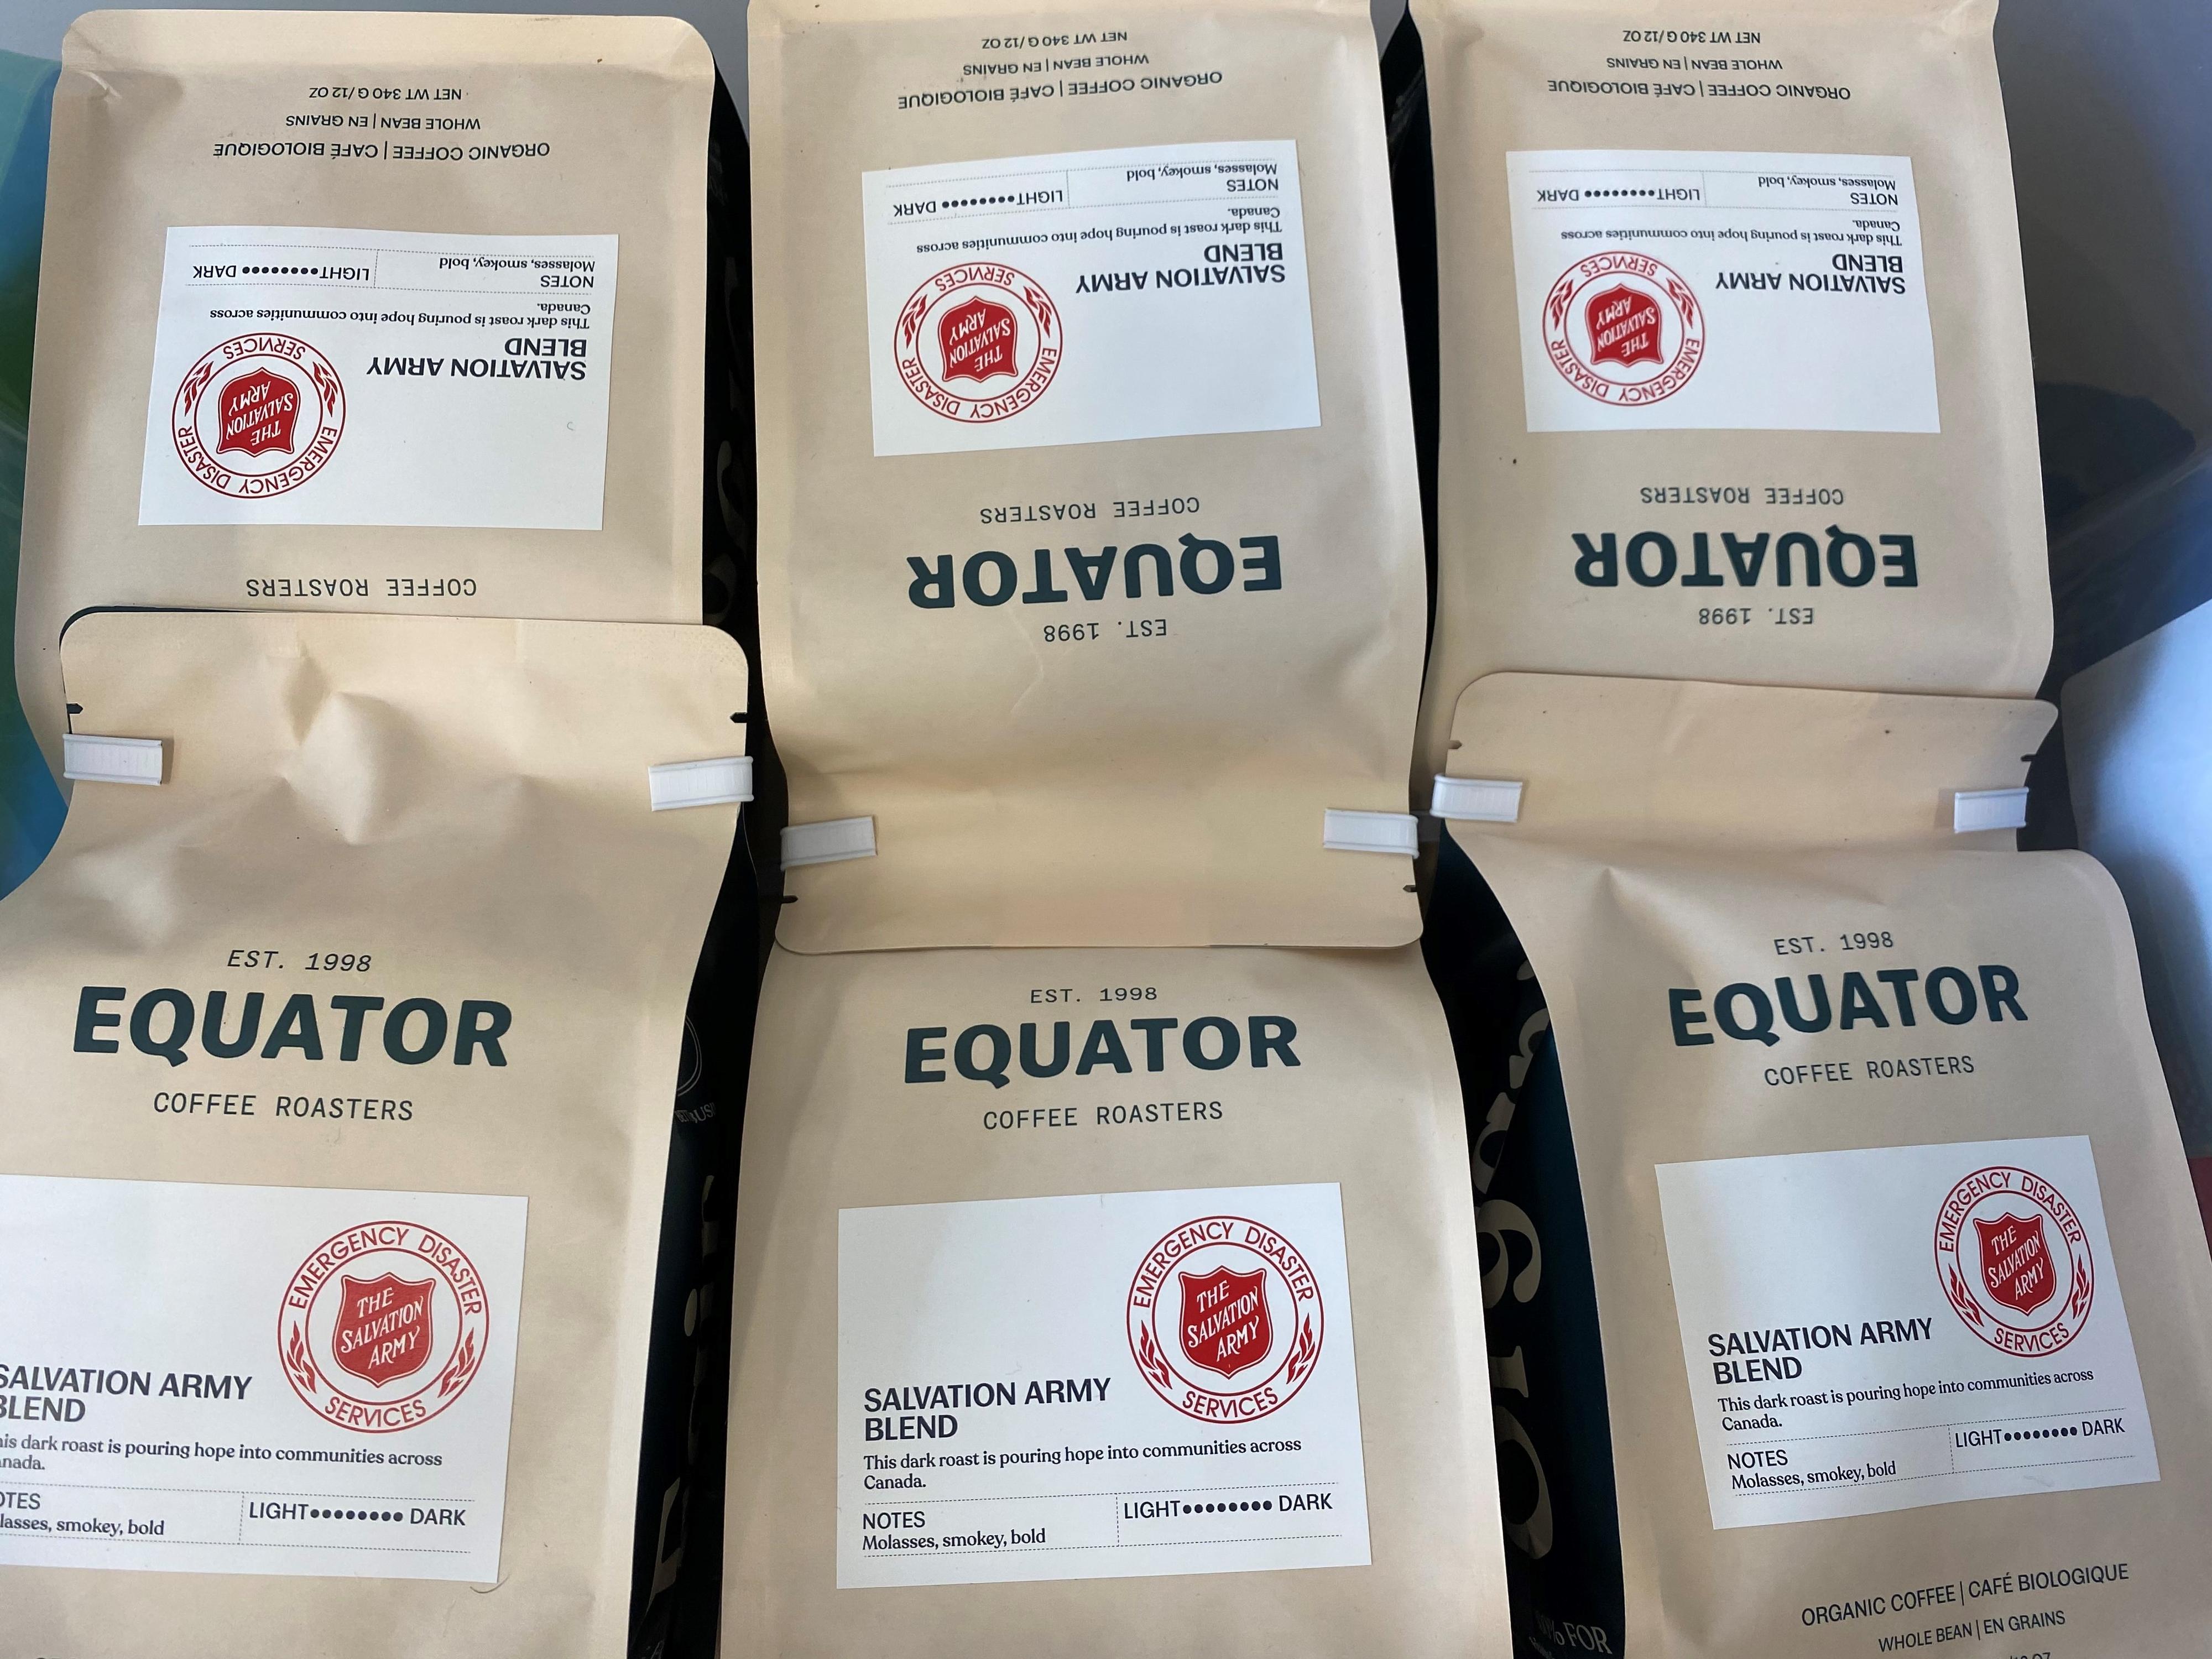 Bags of Equator Coffee